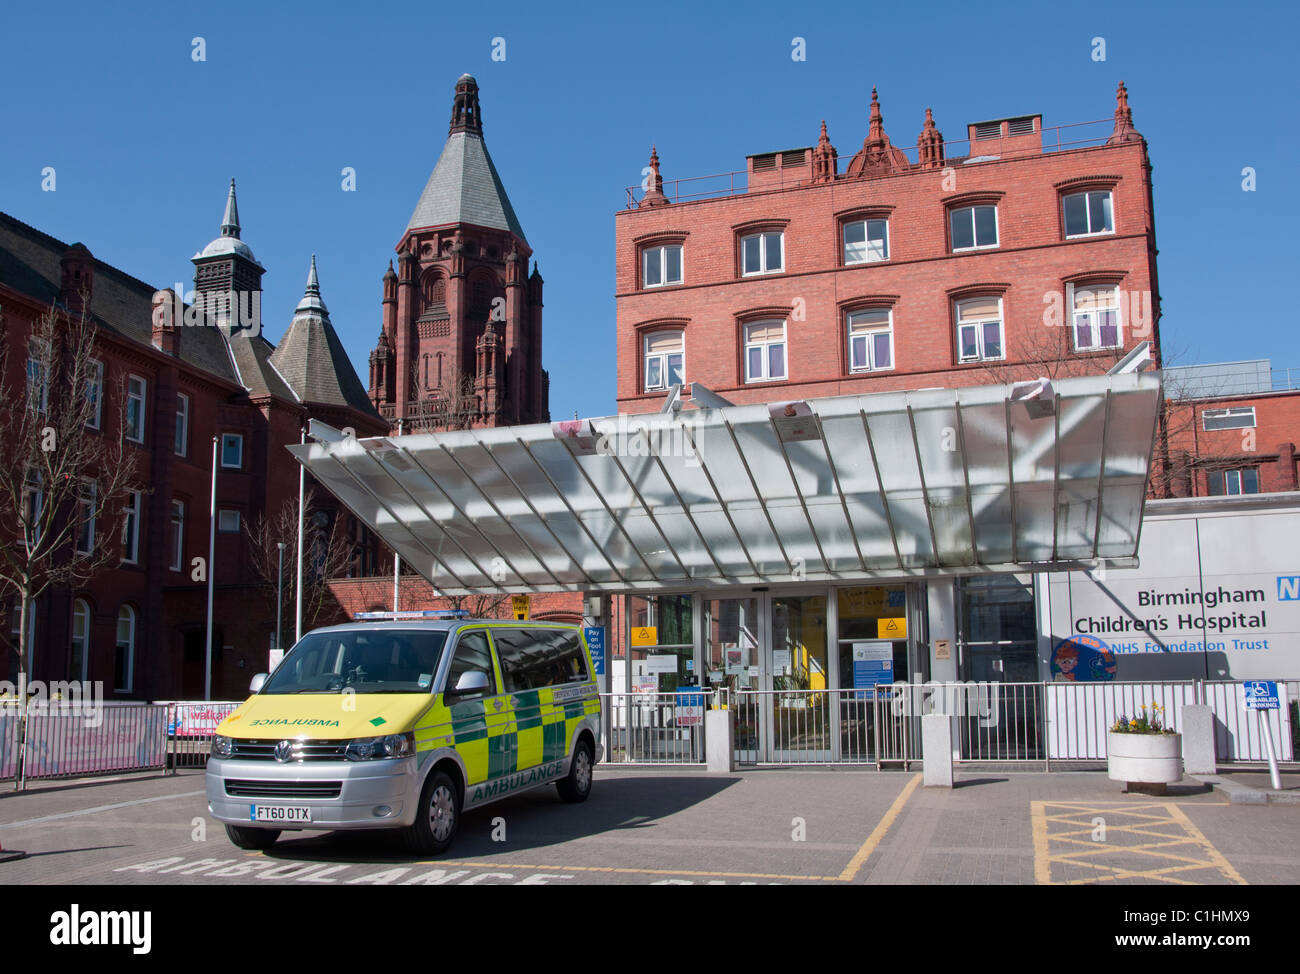 Birmingham Children's Hospital avec Ambulance, West Midlands, England, UK Banque D'Images